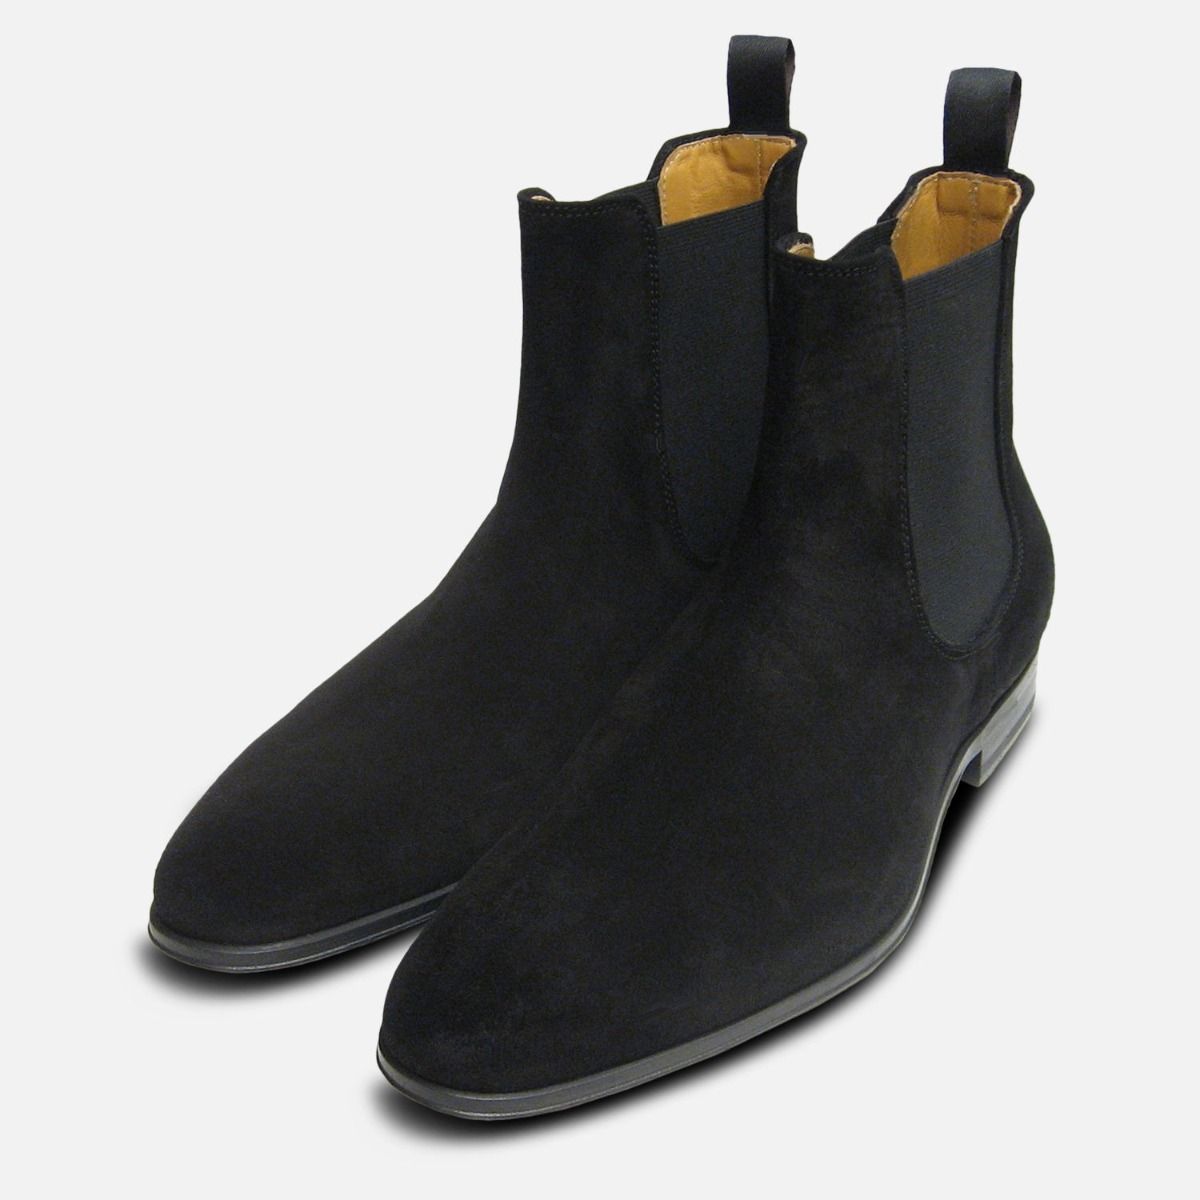 Black Suede Italian Chelsea Boots